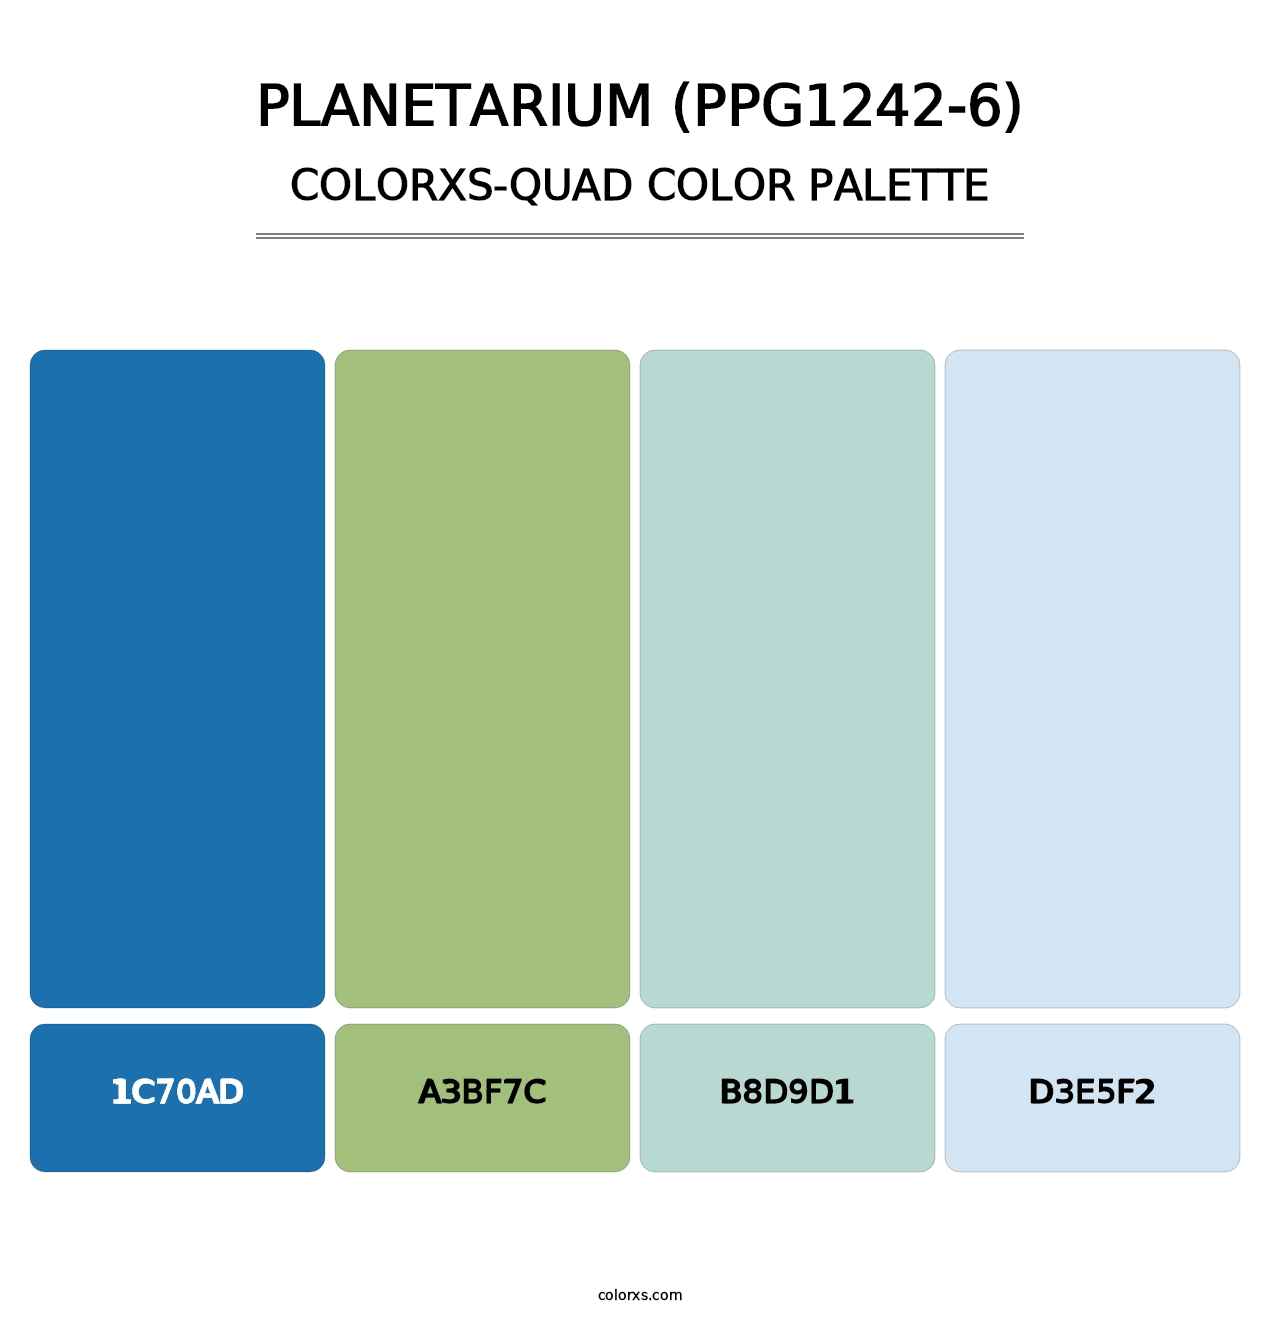 Planetarium (PPG1242-6) - Colorxs Quad Palette